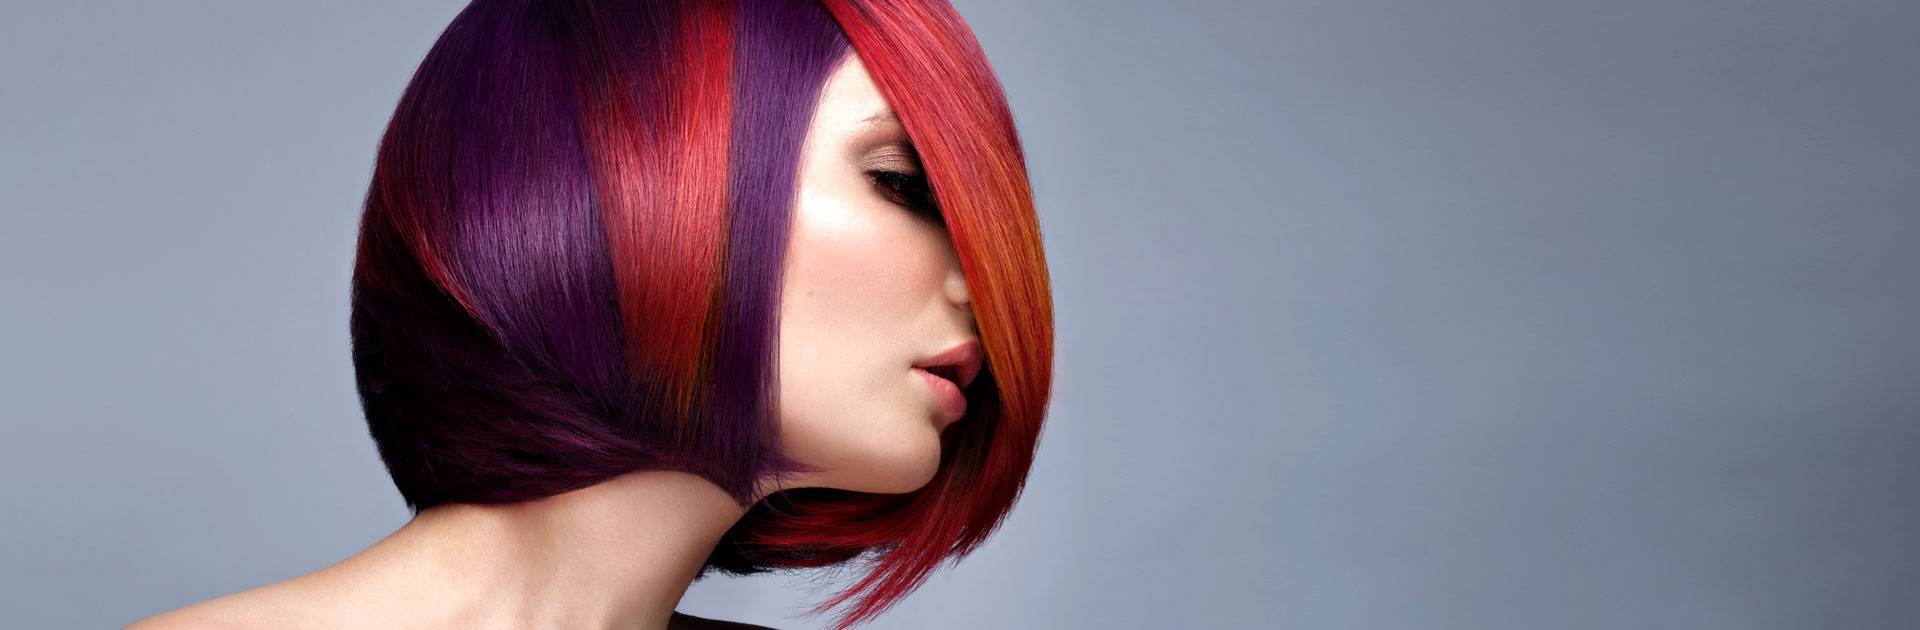 Women – Hair Coloring and Streaks